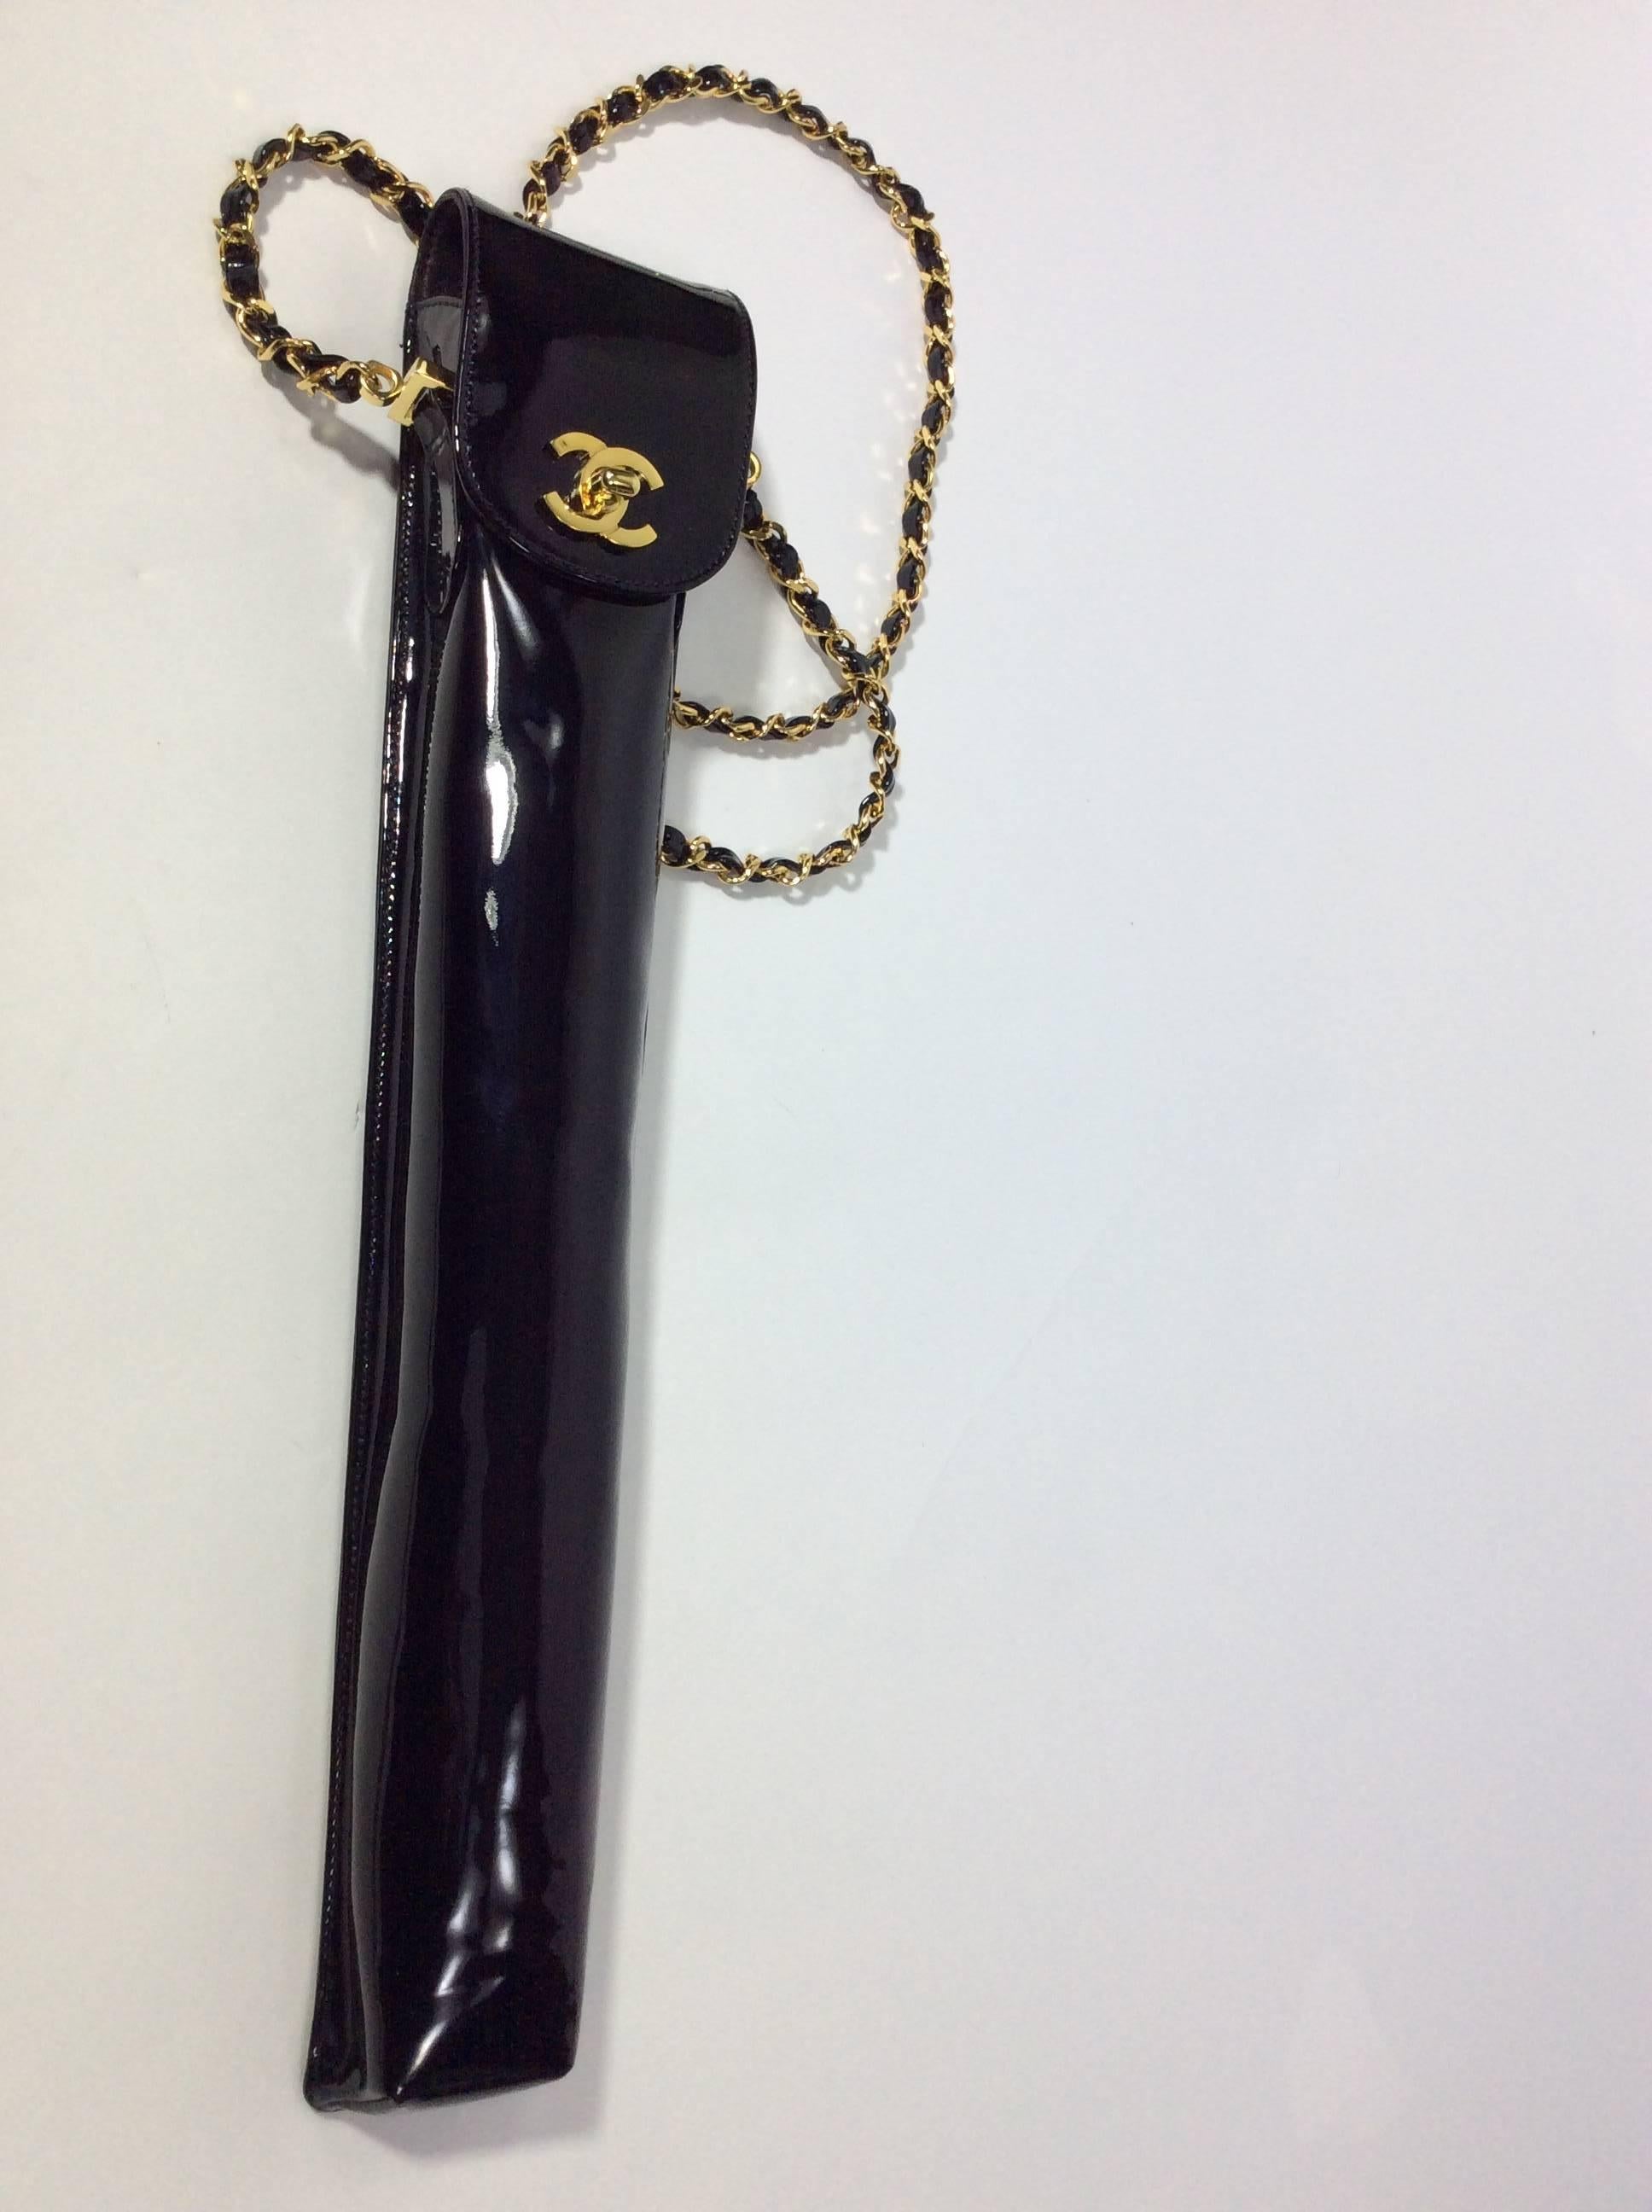 Black Patent Leather Umbrella Carrier
Goldtone Chain Strap
GoldtoneTwist Open Lock inside CC Logo
17.5